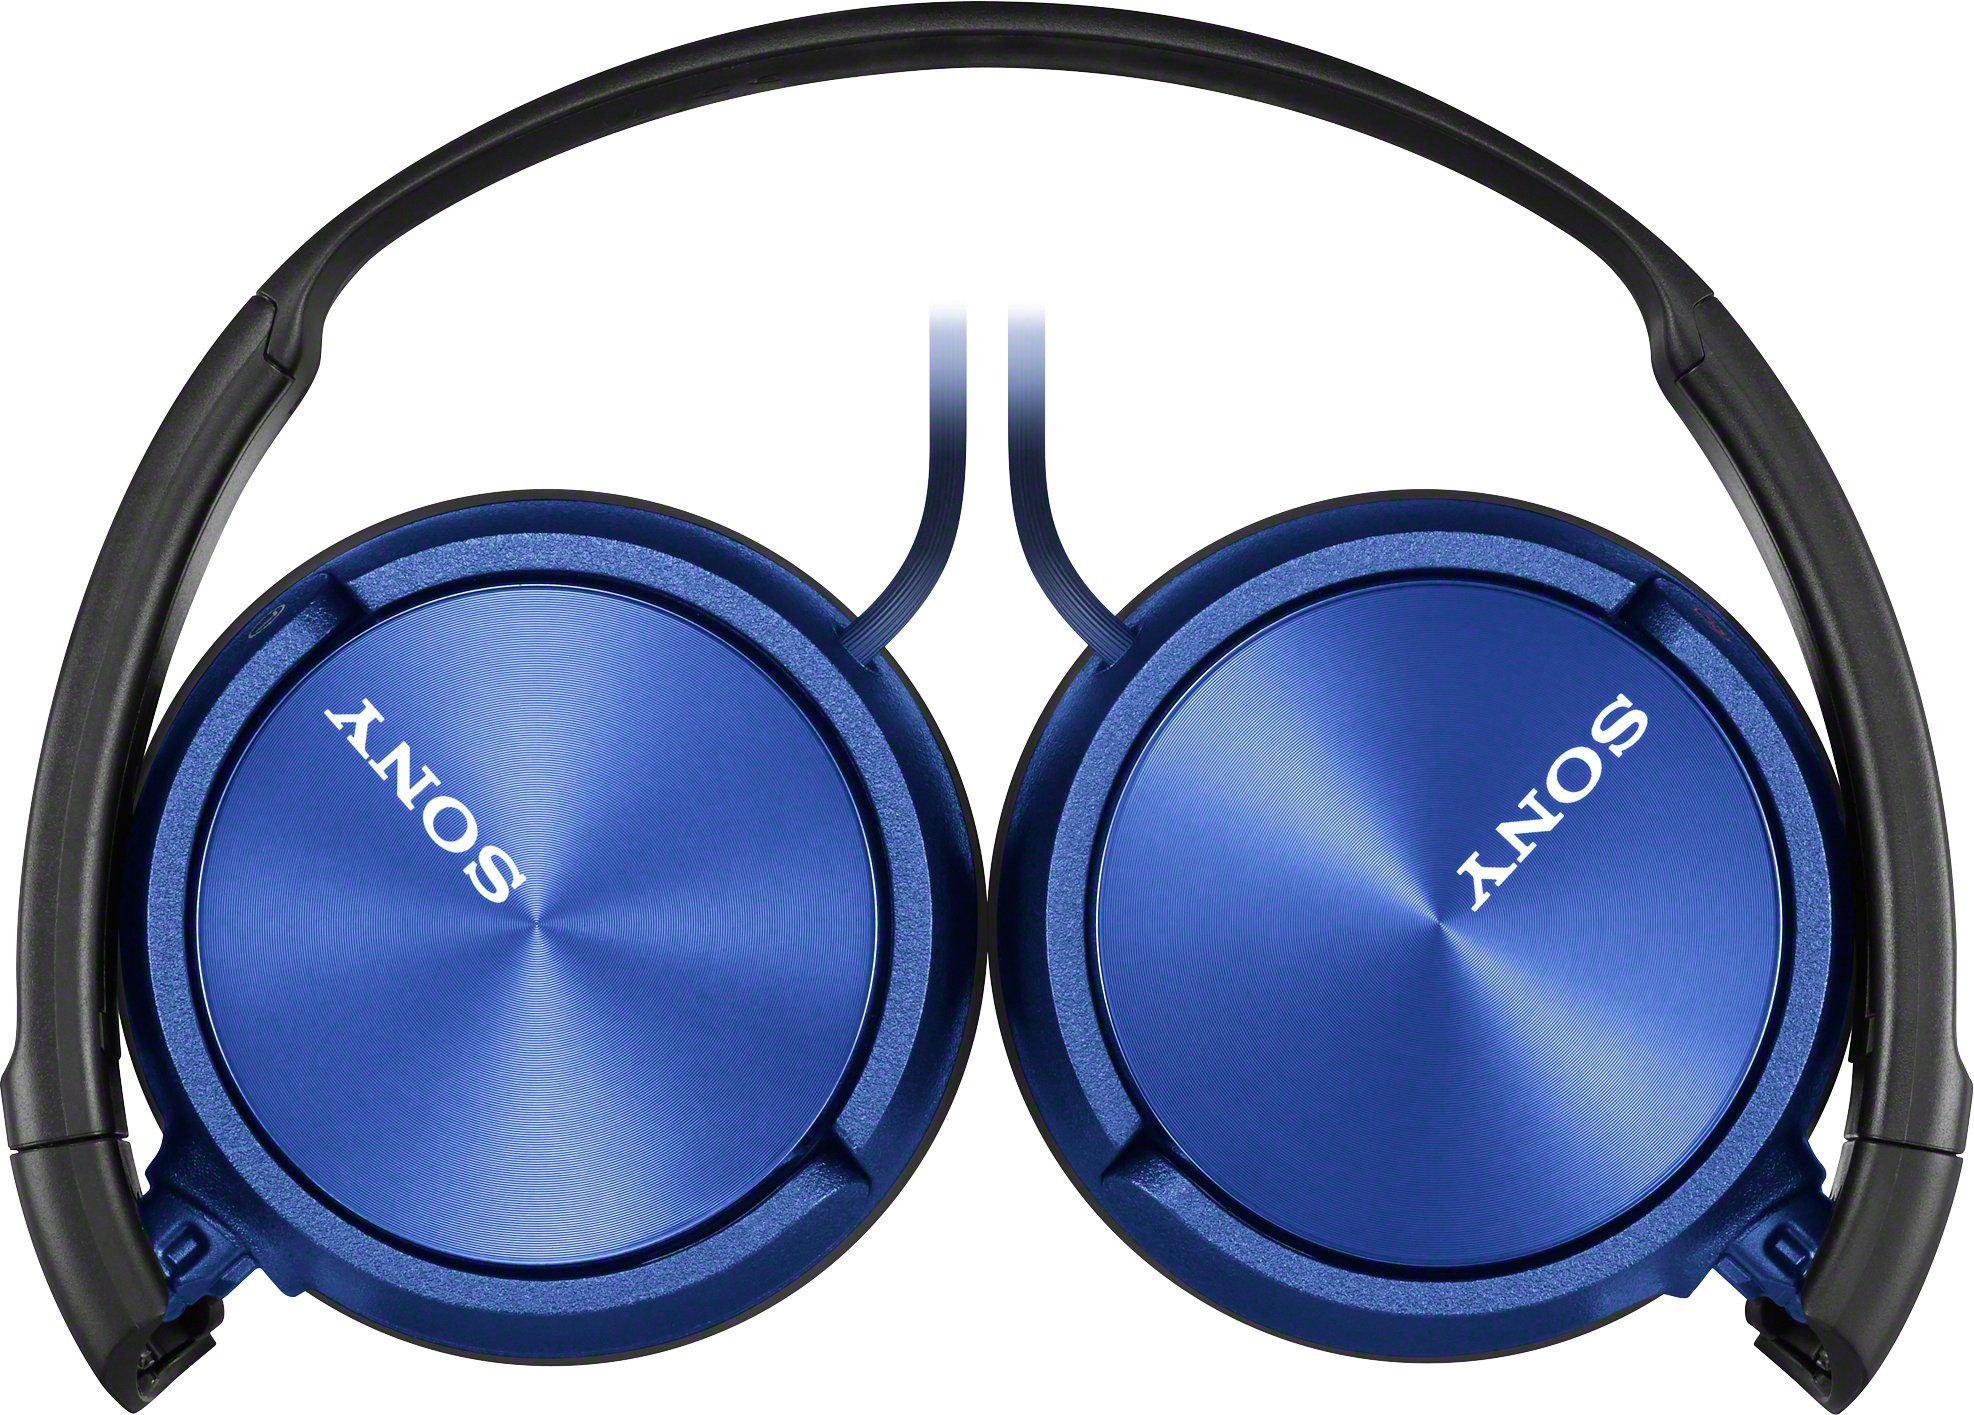 blau MDR-ZX310 Sony Over-Ear-Kopfhörer